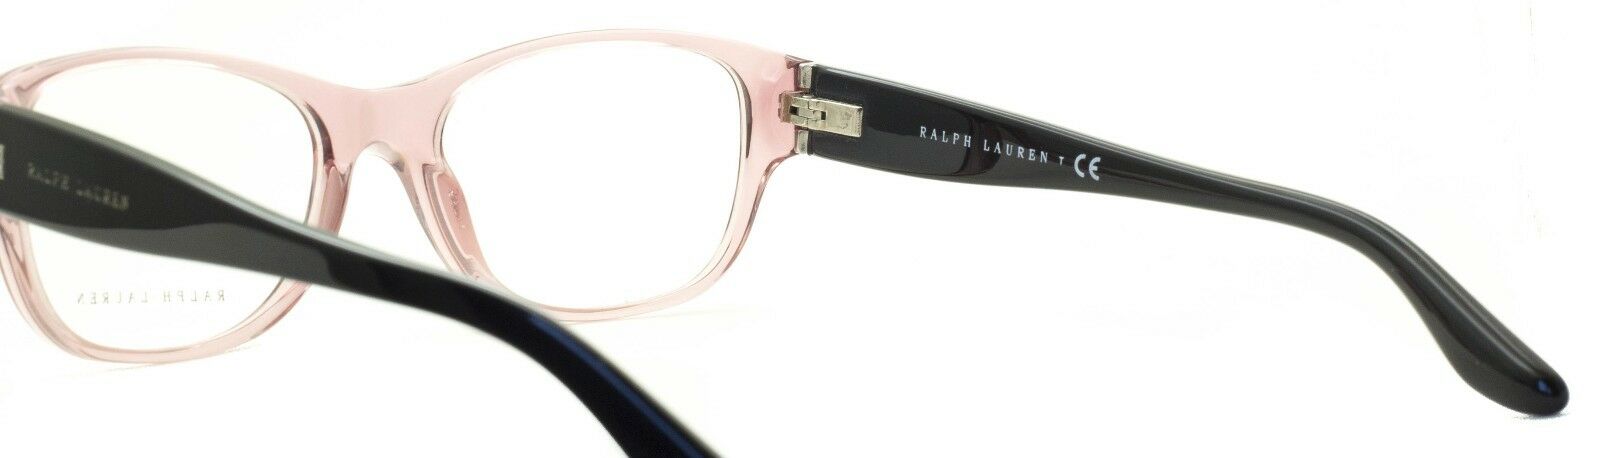 RALPH LAUREN RL 6126B 5220 Eyewear FRAMES RX Optical Eyeglasses Glasses - New